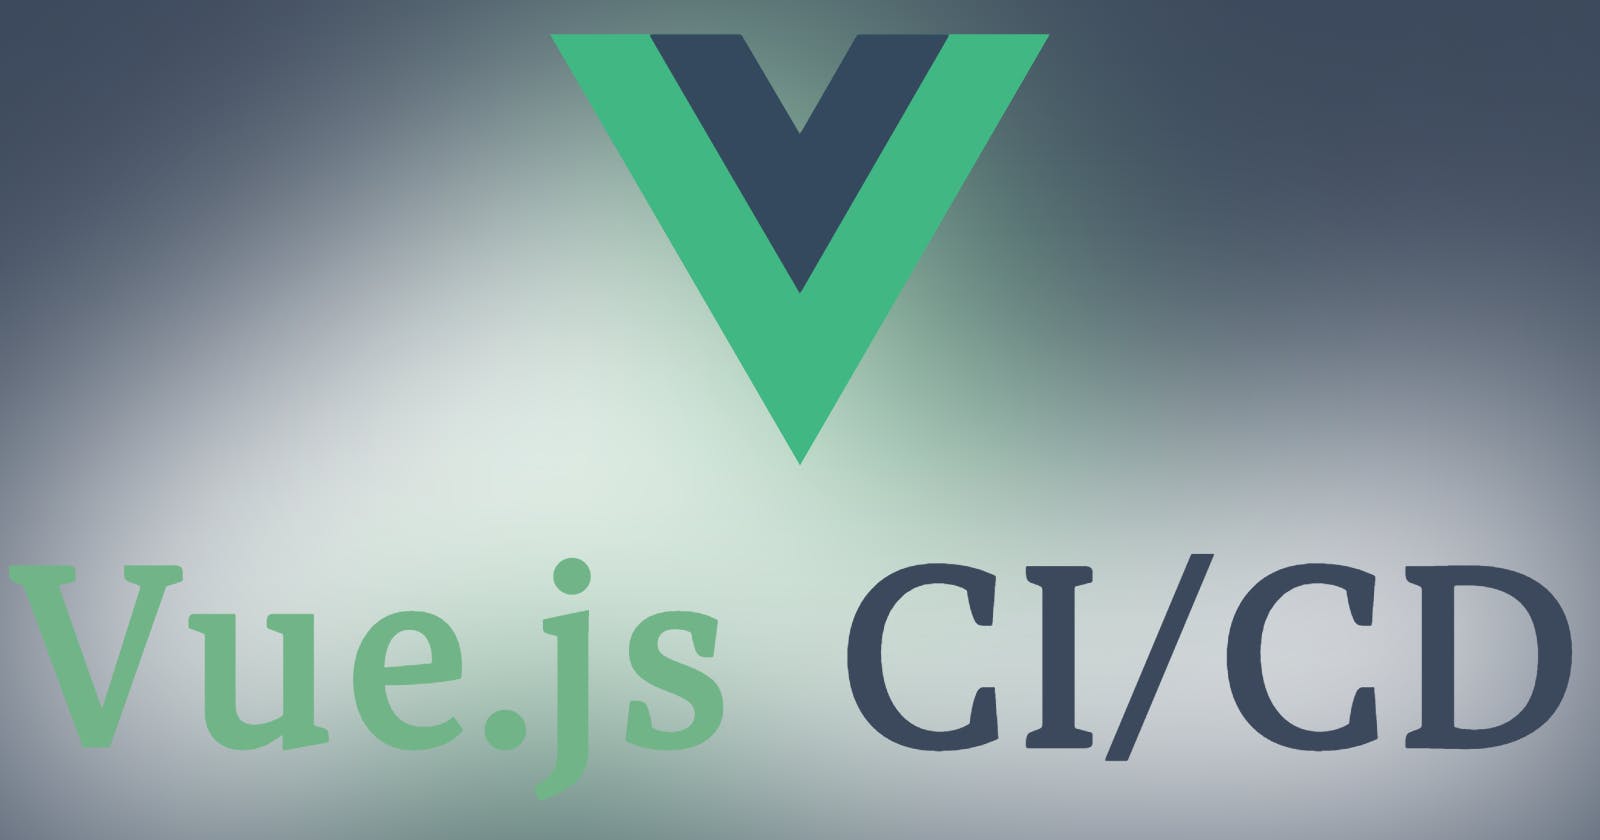 Introducing the Vue.js CI/CD series